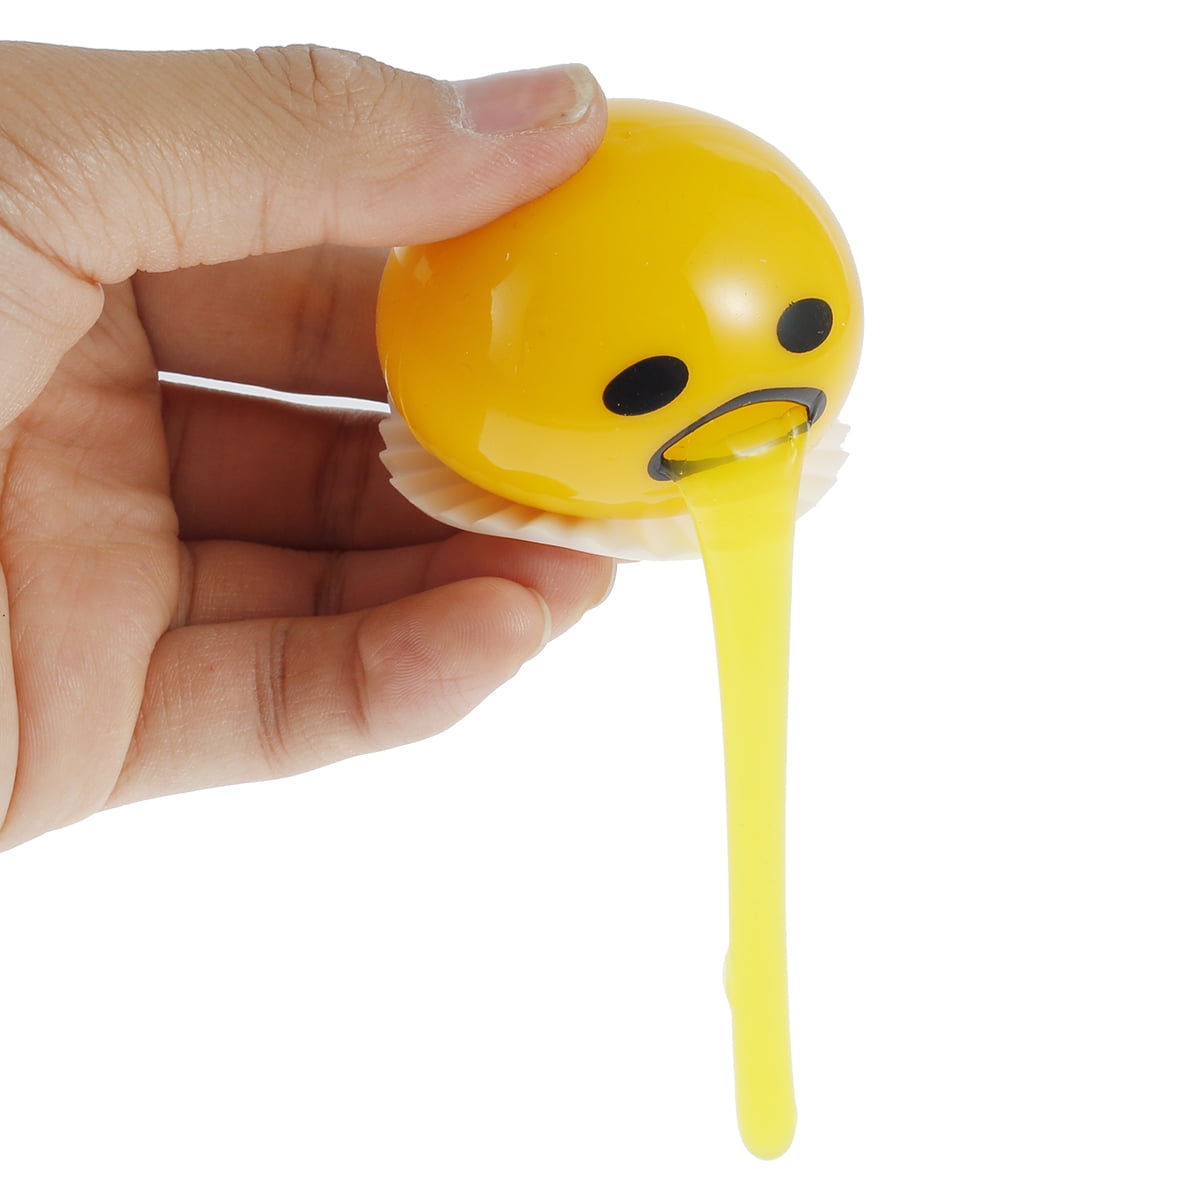 Squishy Toy Squeeze Soft Stress Relief Vomit Anxiety Focus Hand Funny Joke Puke 